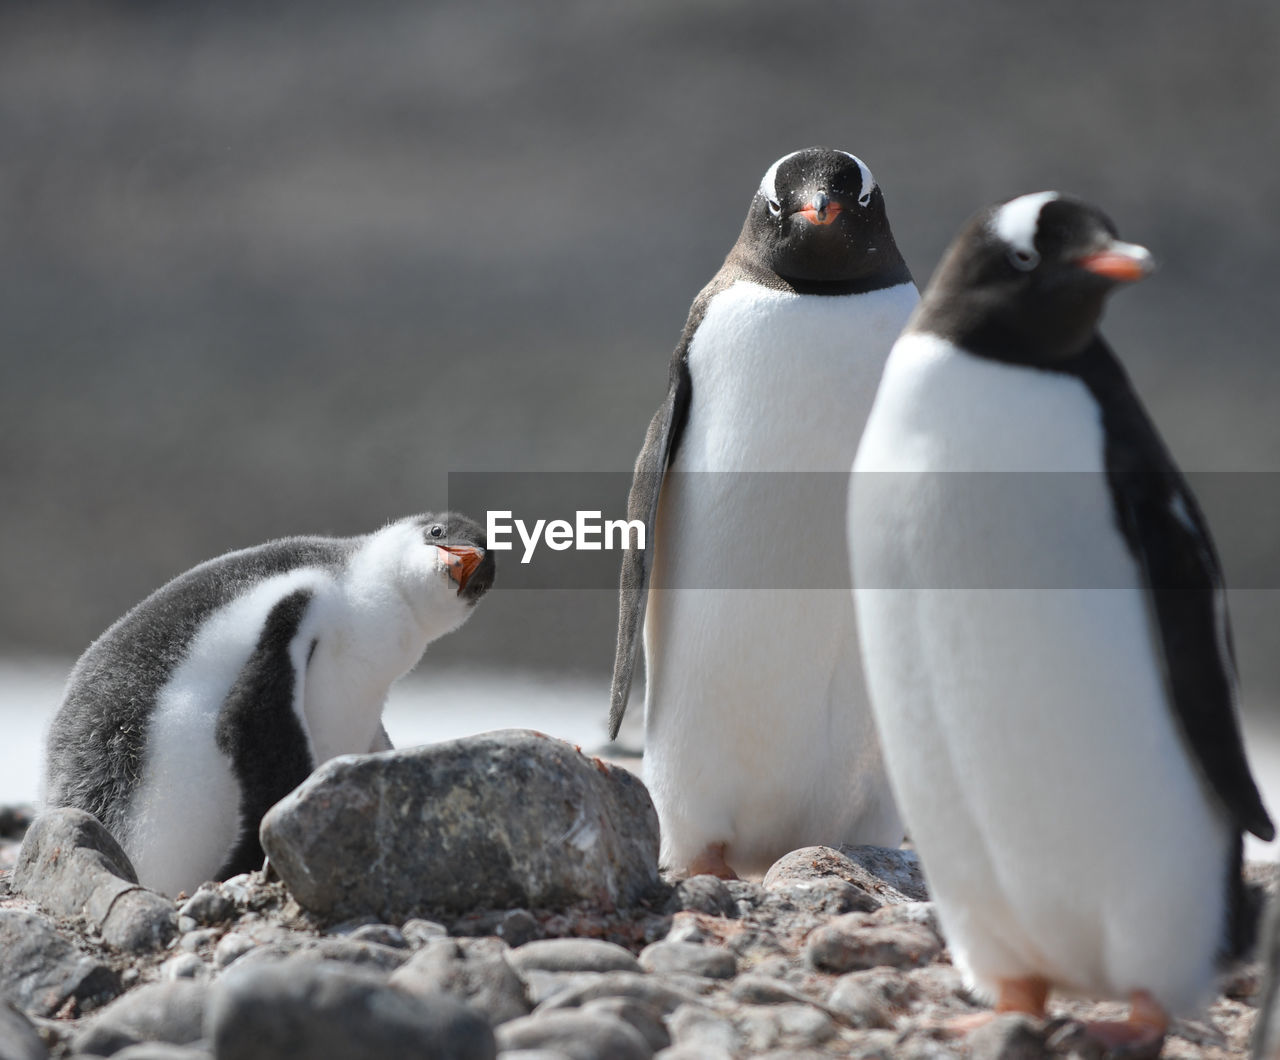 Penguins at falkland islands